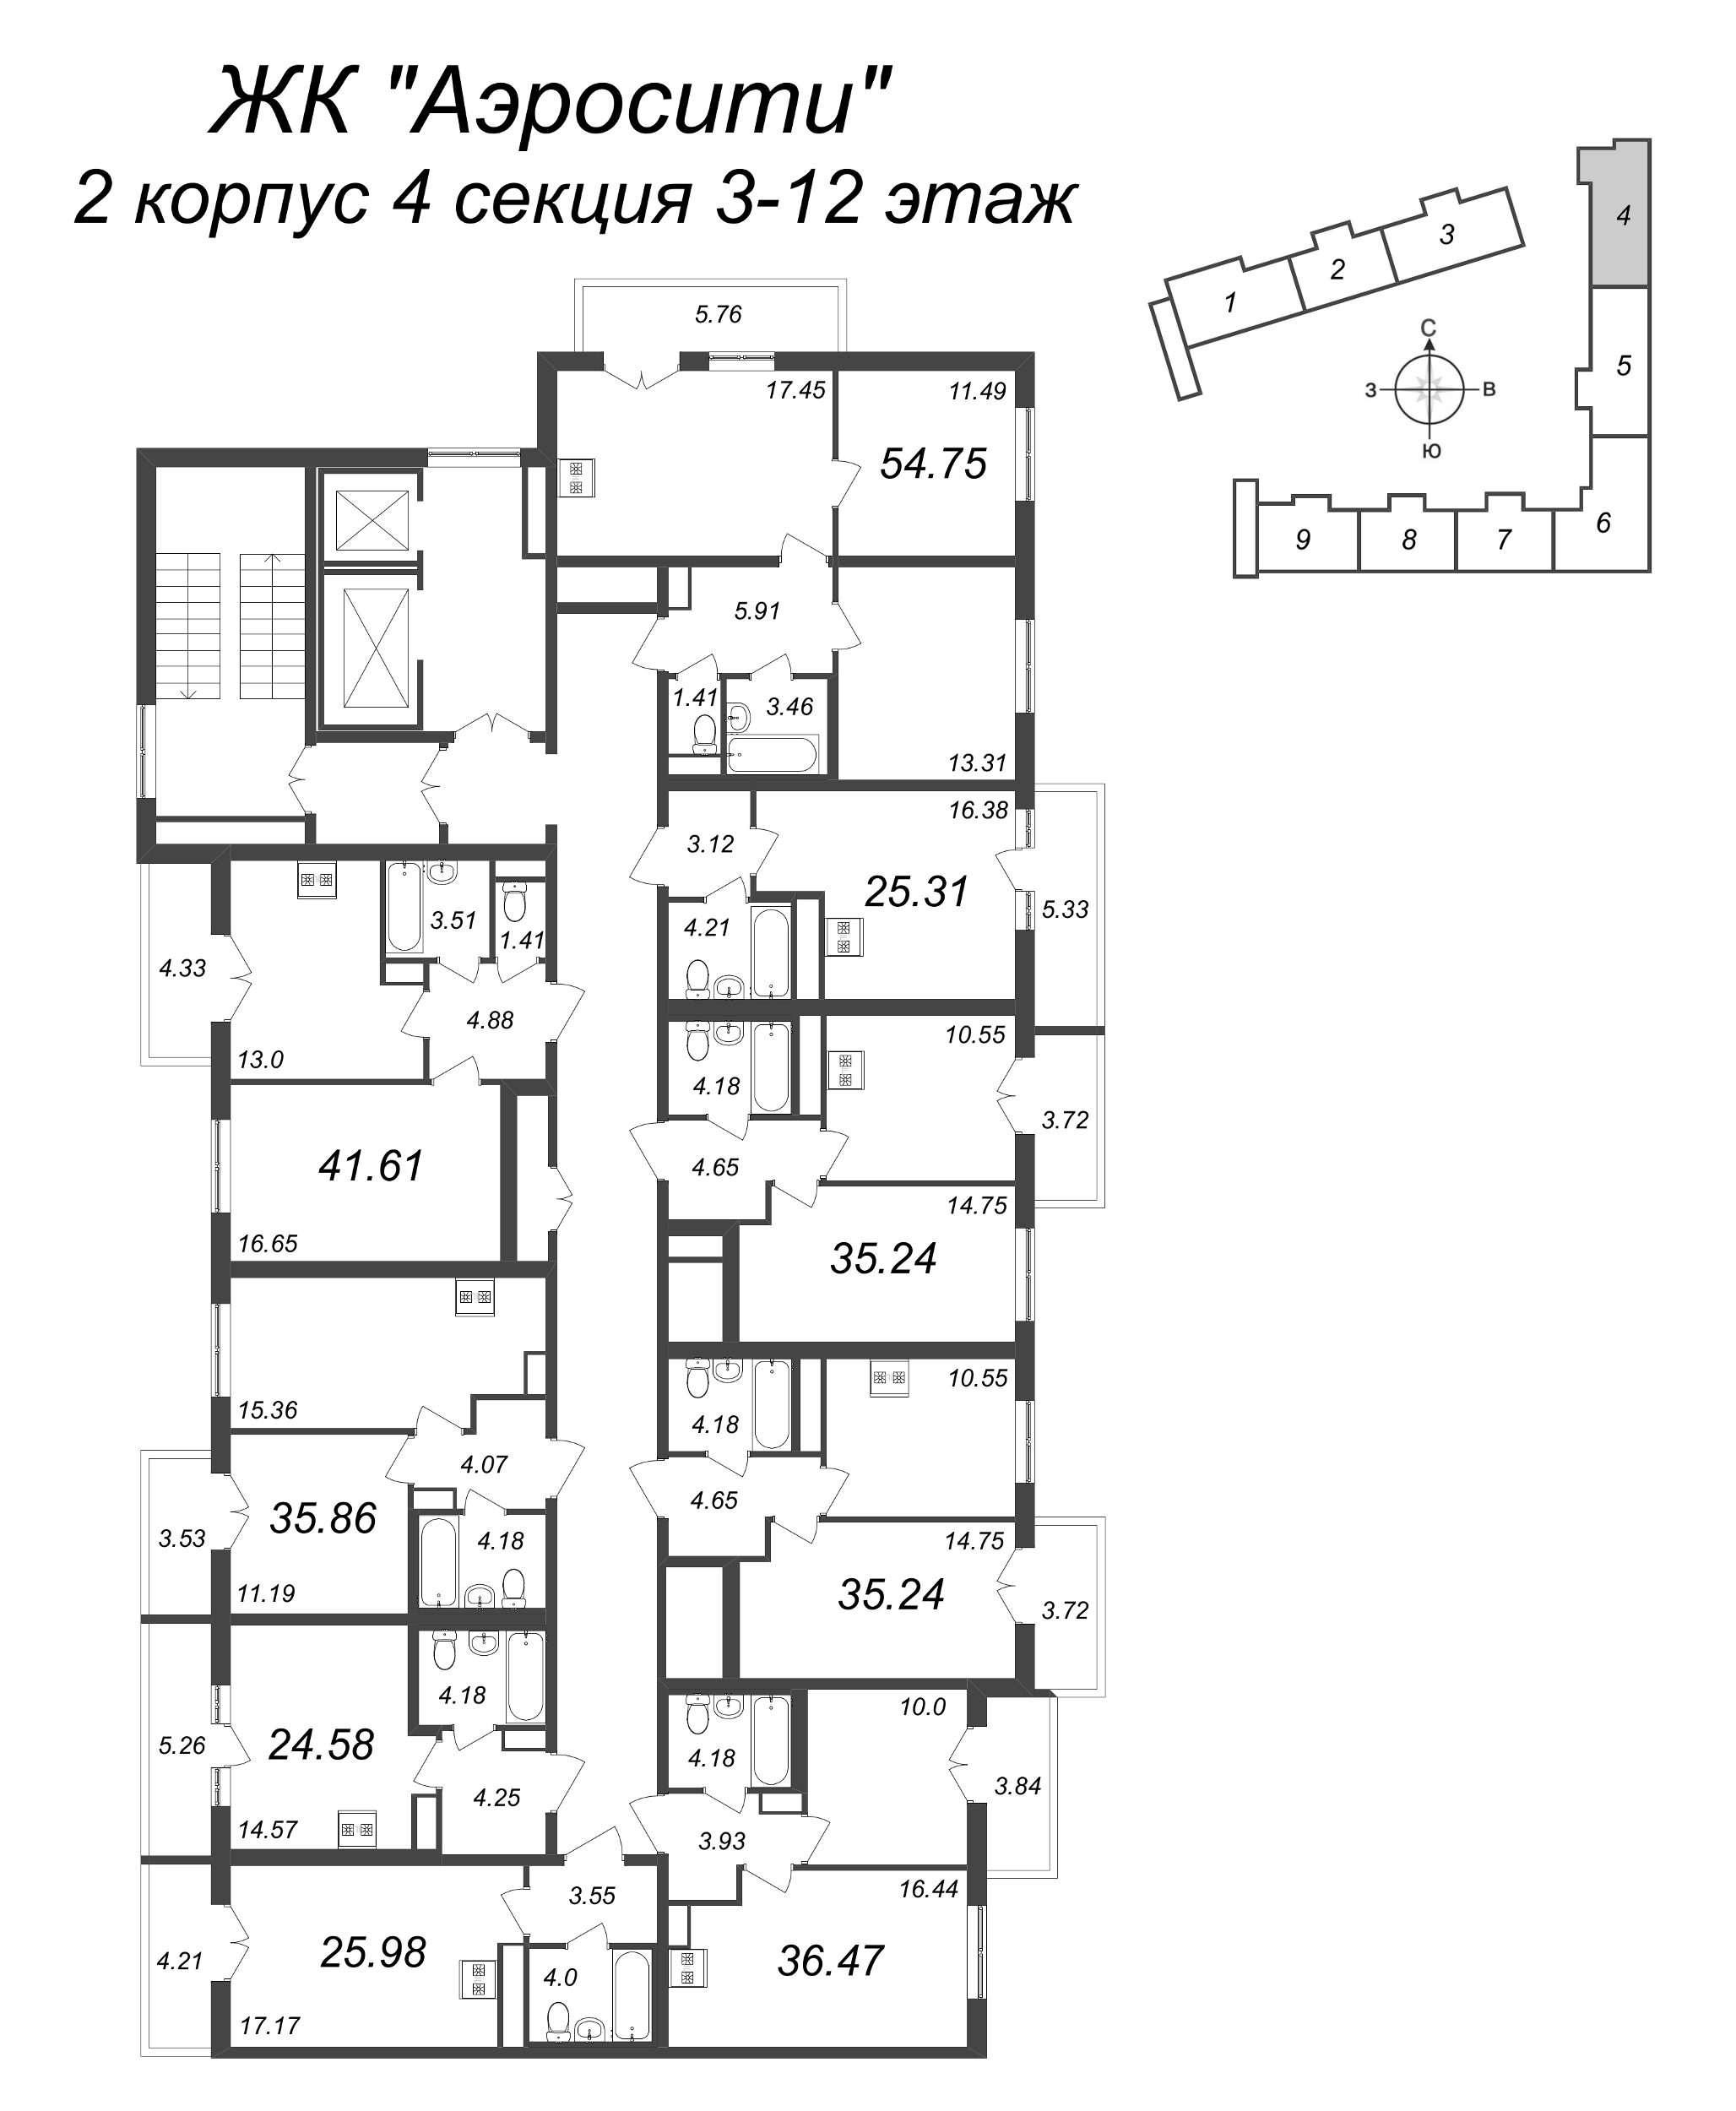 3-комнатная (Евро) квартира, 54.75 м² - планировка этажа